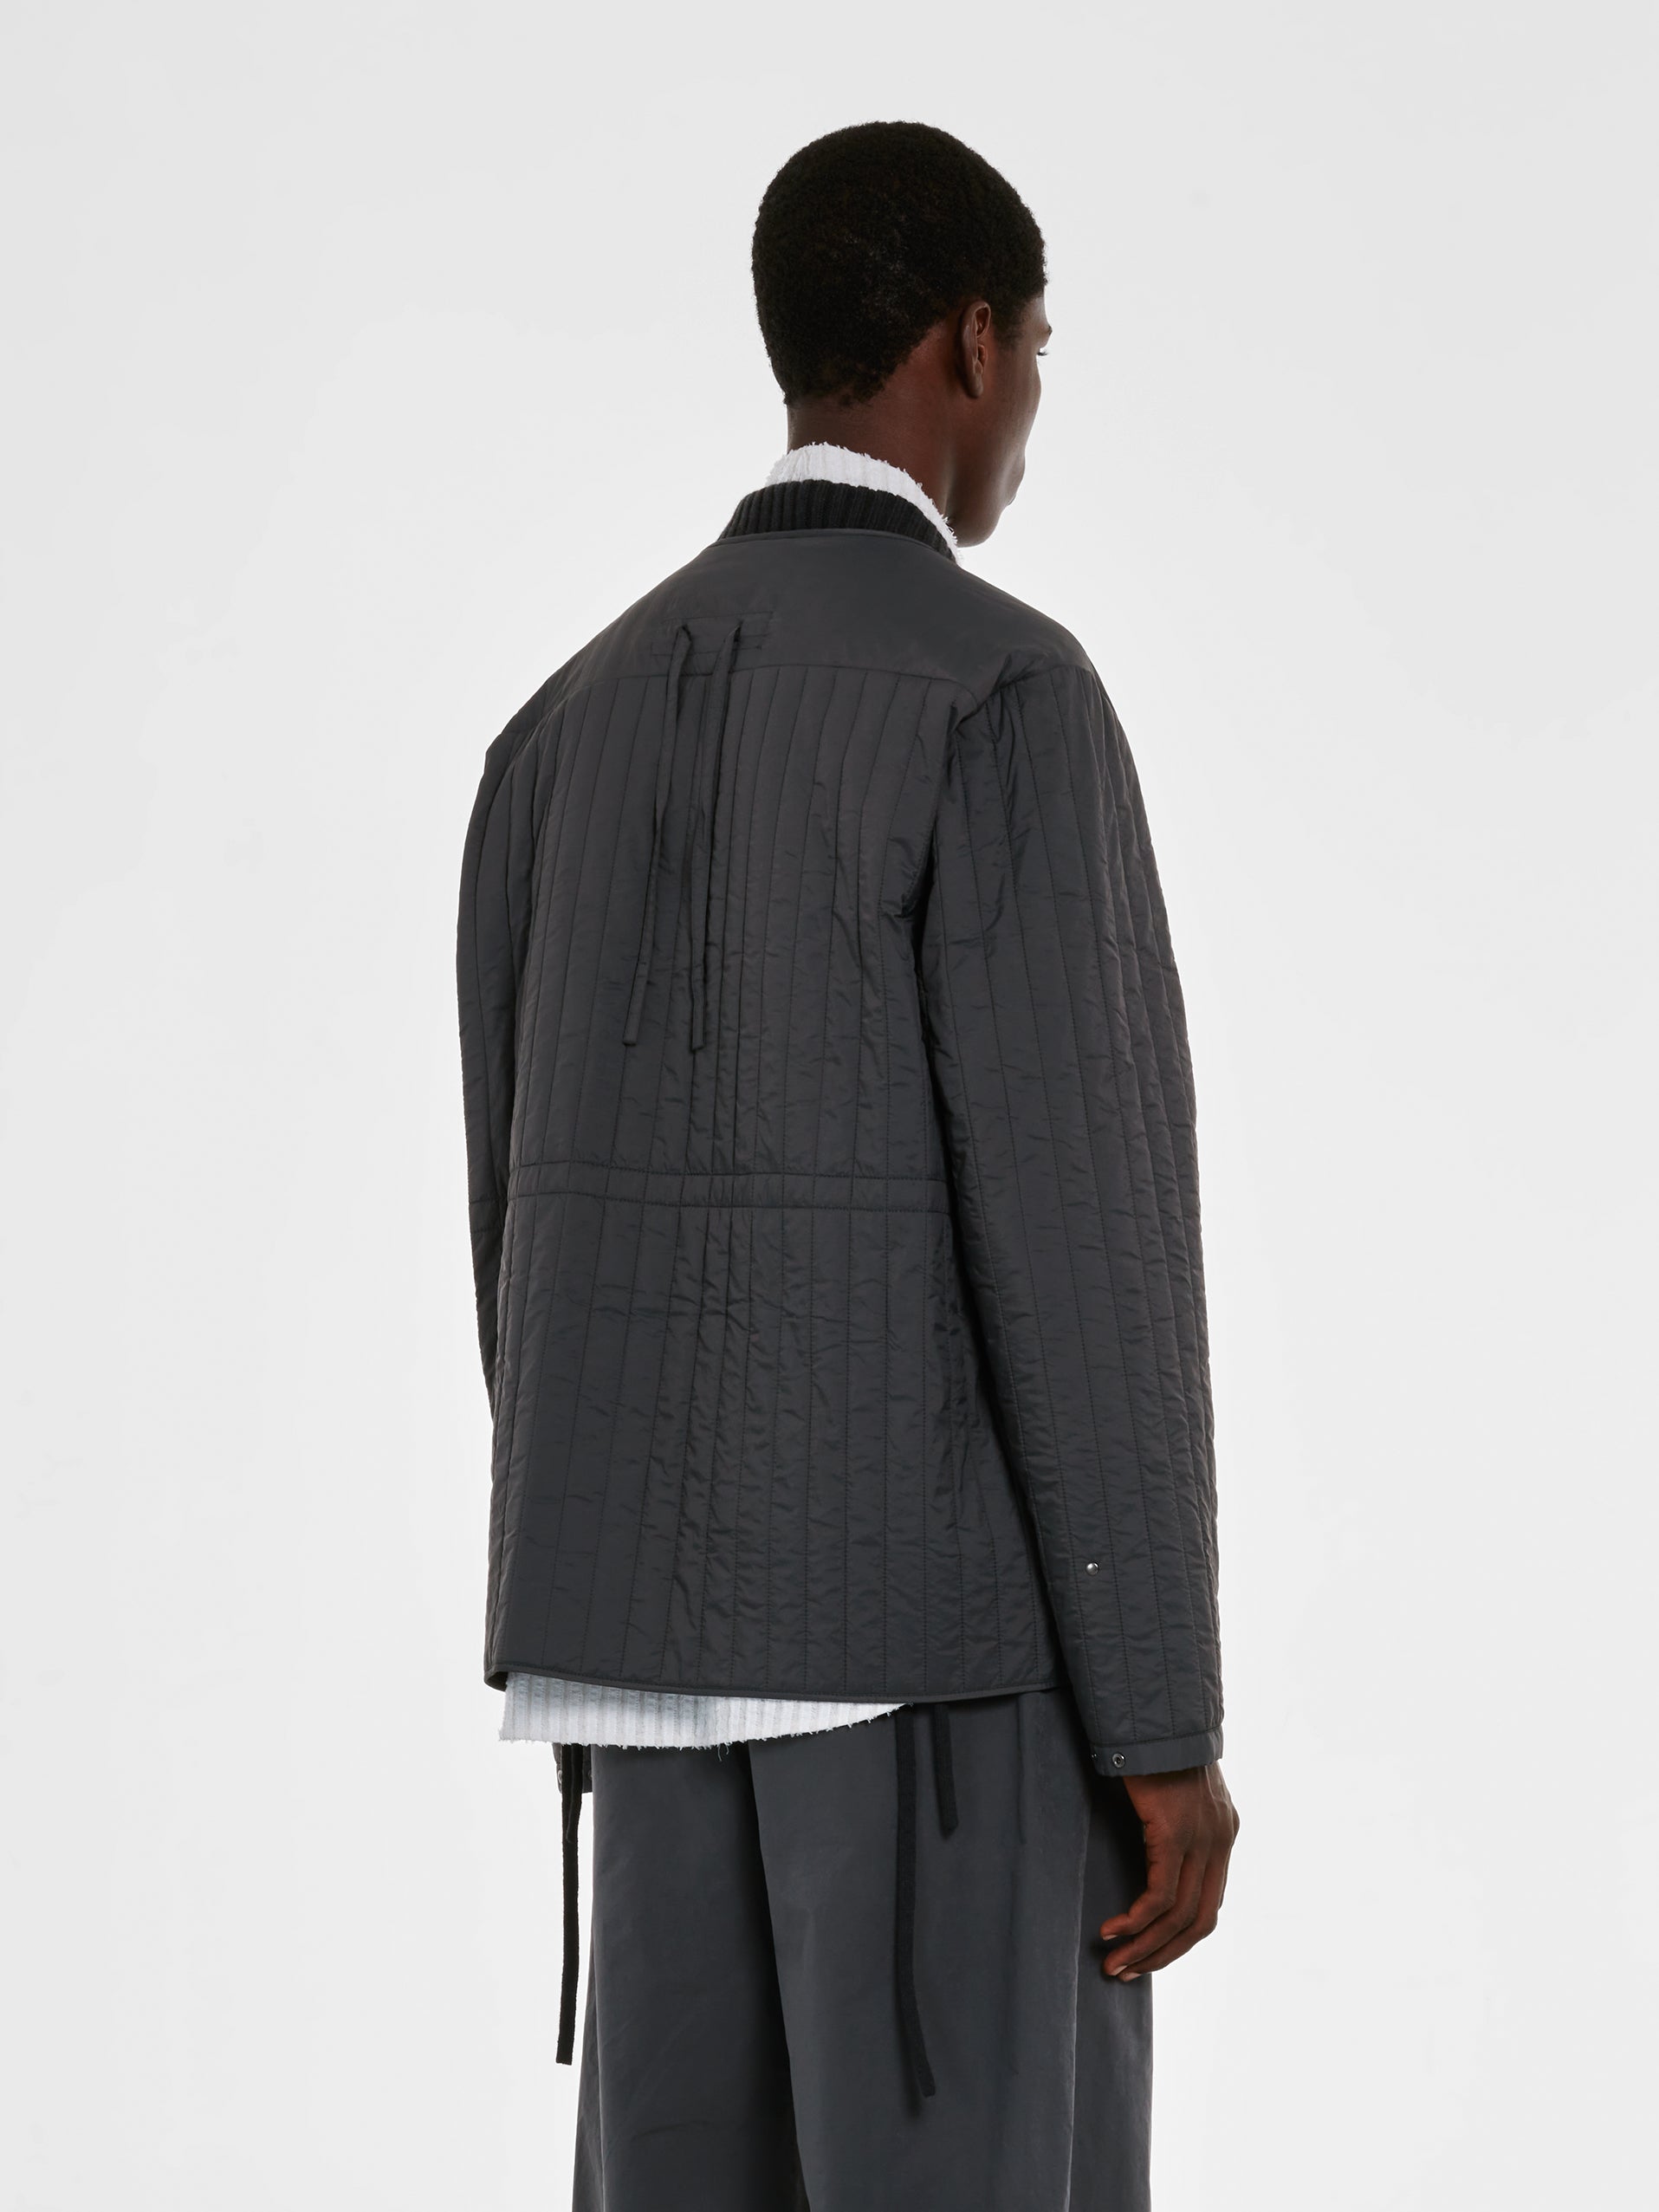 Craig Green - Men’s Quilted Liner Jacket - (Grey) view 3